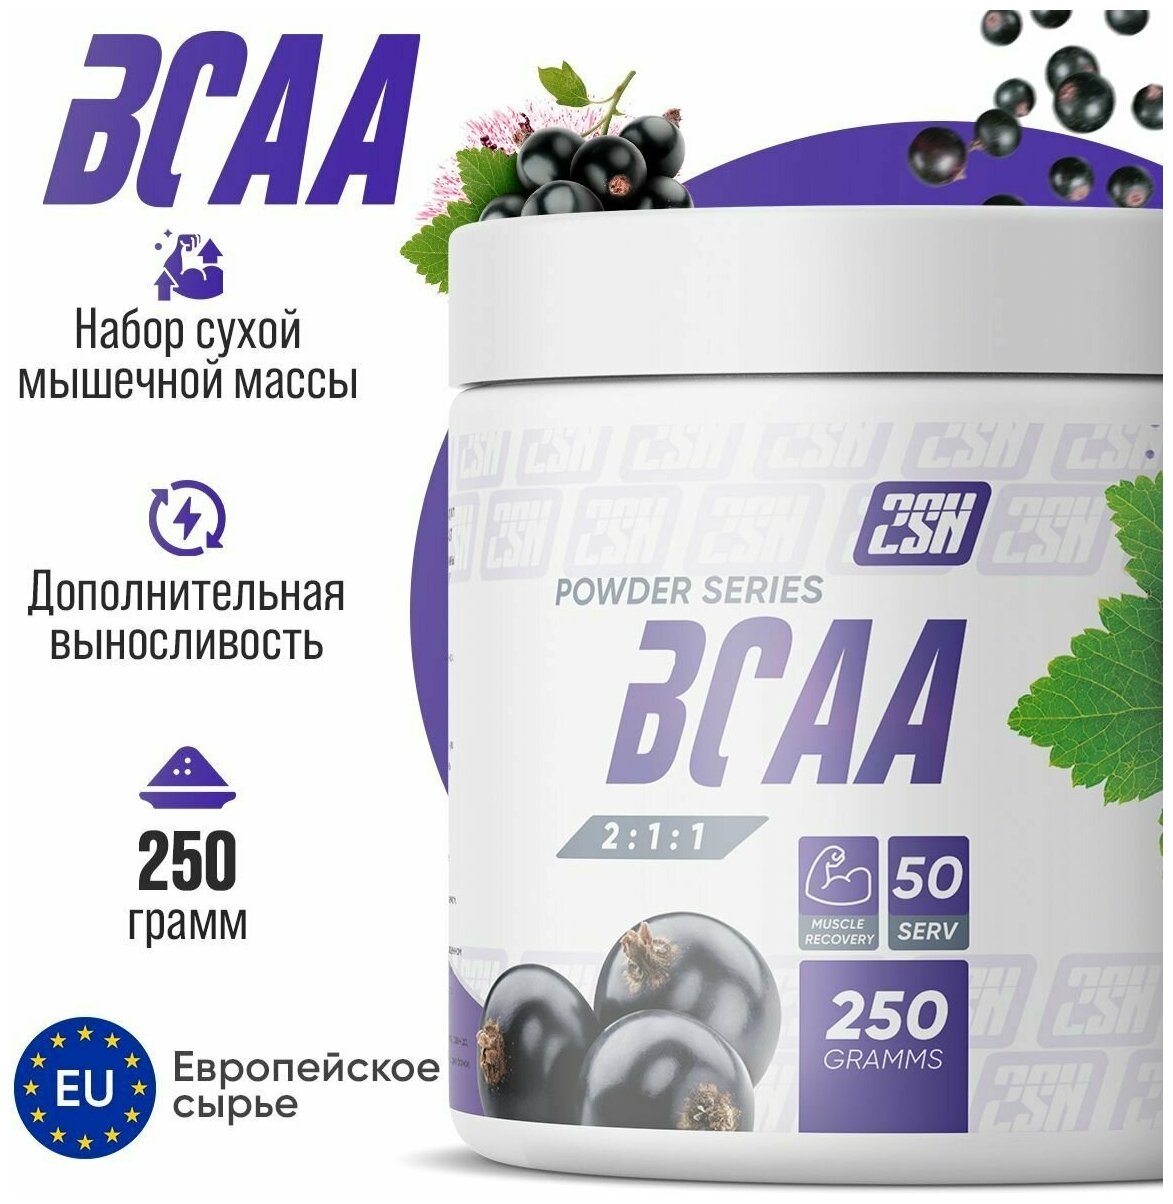 2SN BCAA powder 250g (Черная смородина)